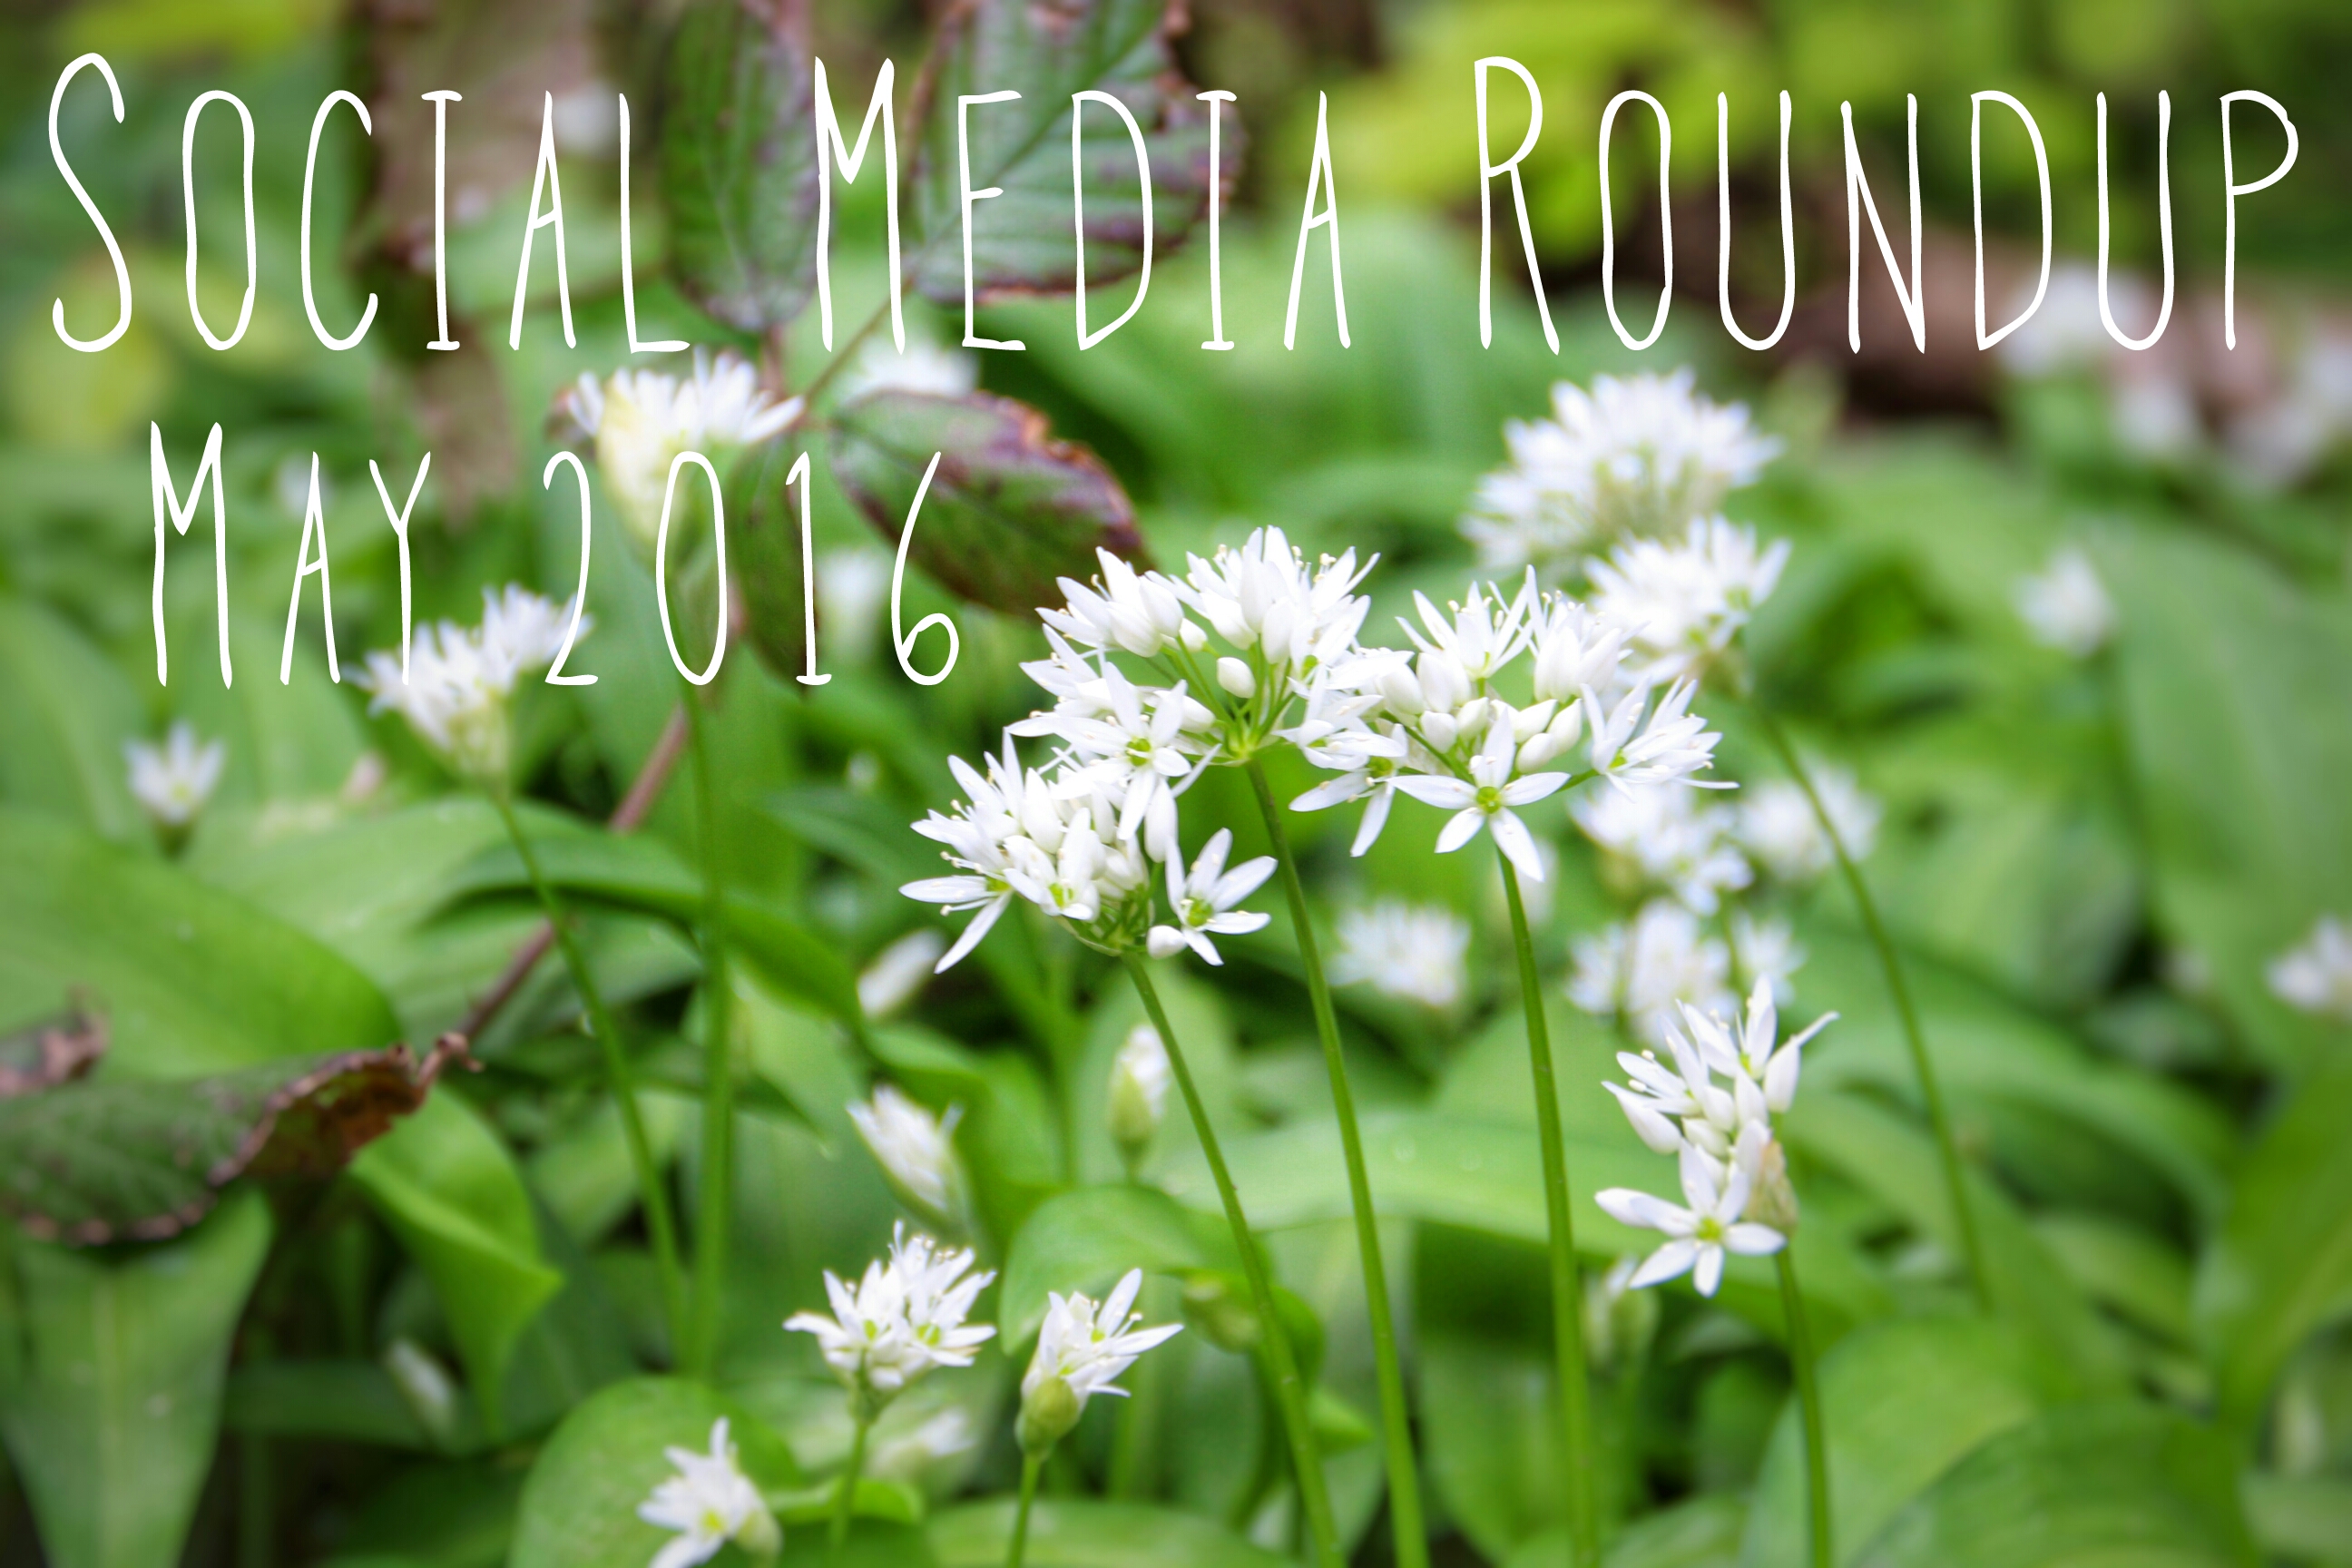 Social Media Roundup May 2016 header